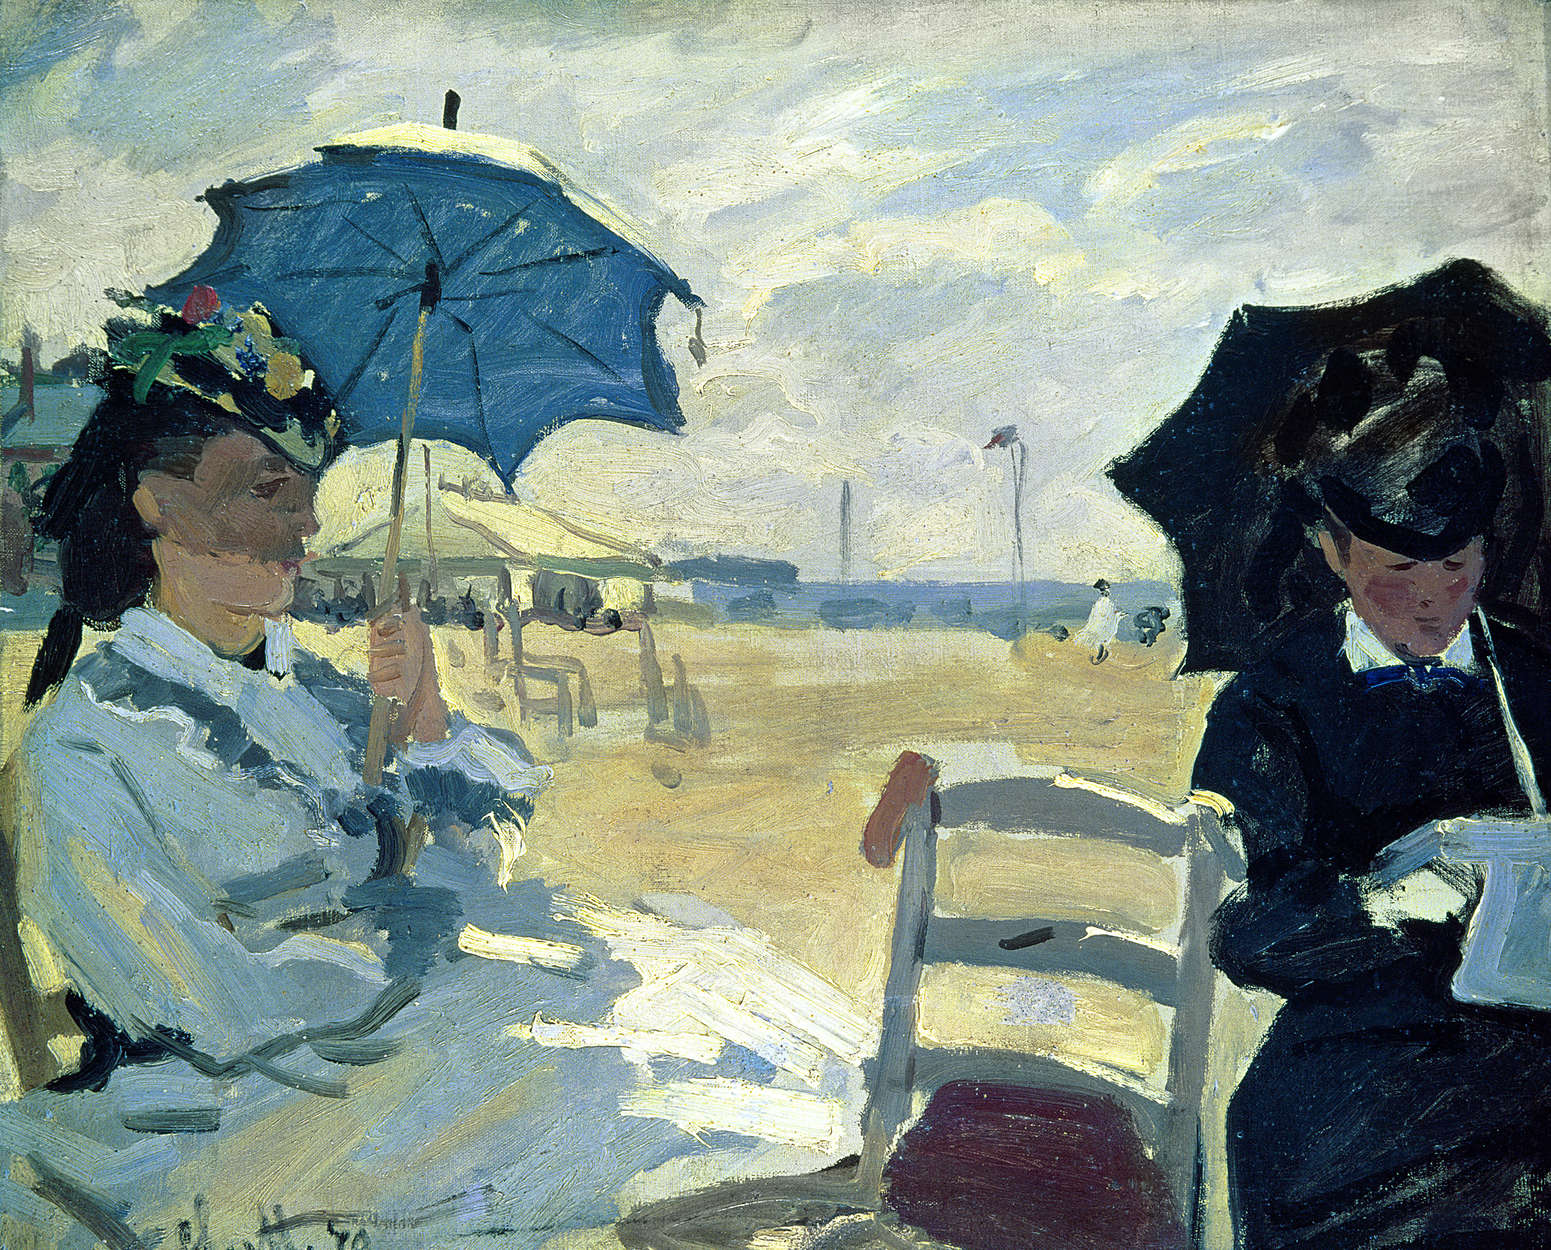             Photo wallpaper "The beach Trouville" by Claude Monet
        